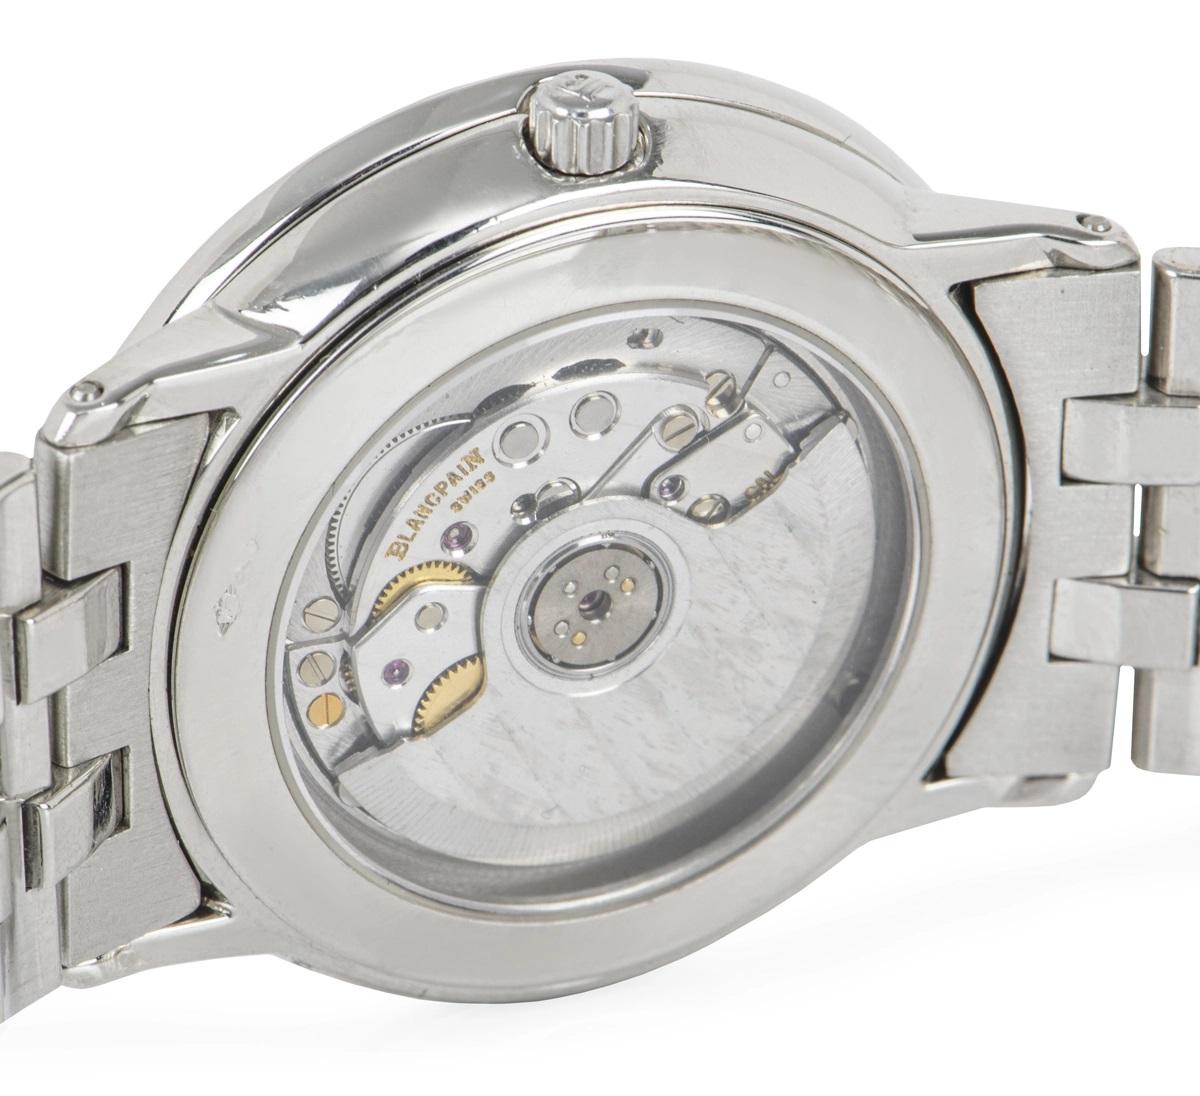 Blancpain Villeret Platinum Diamond Set Watch 4795-4227-34 1